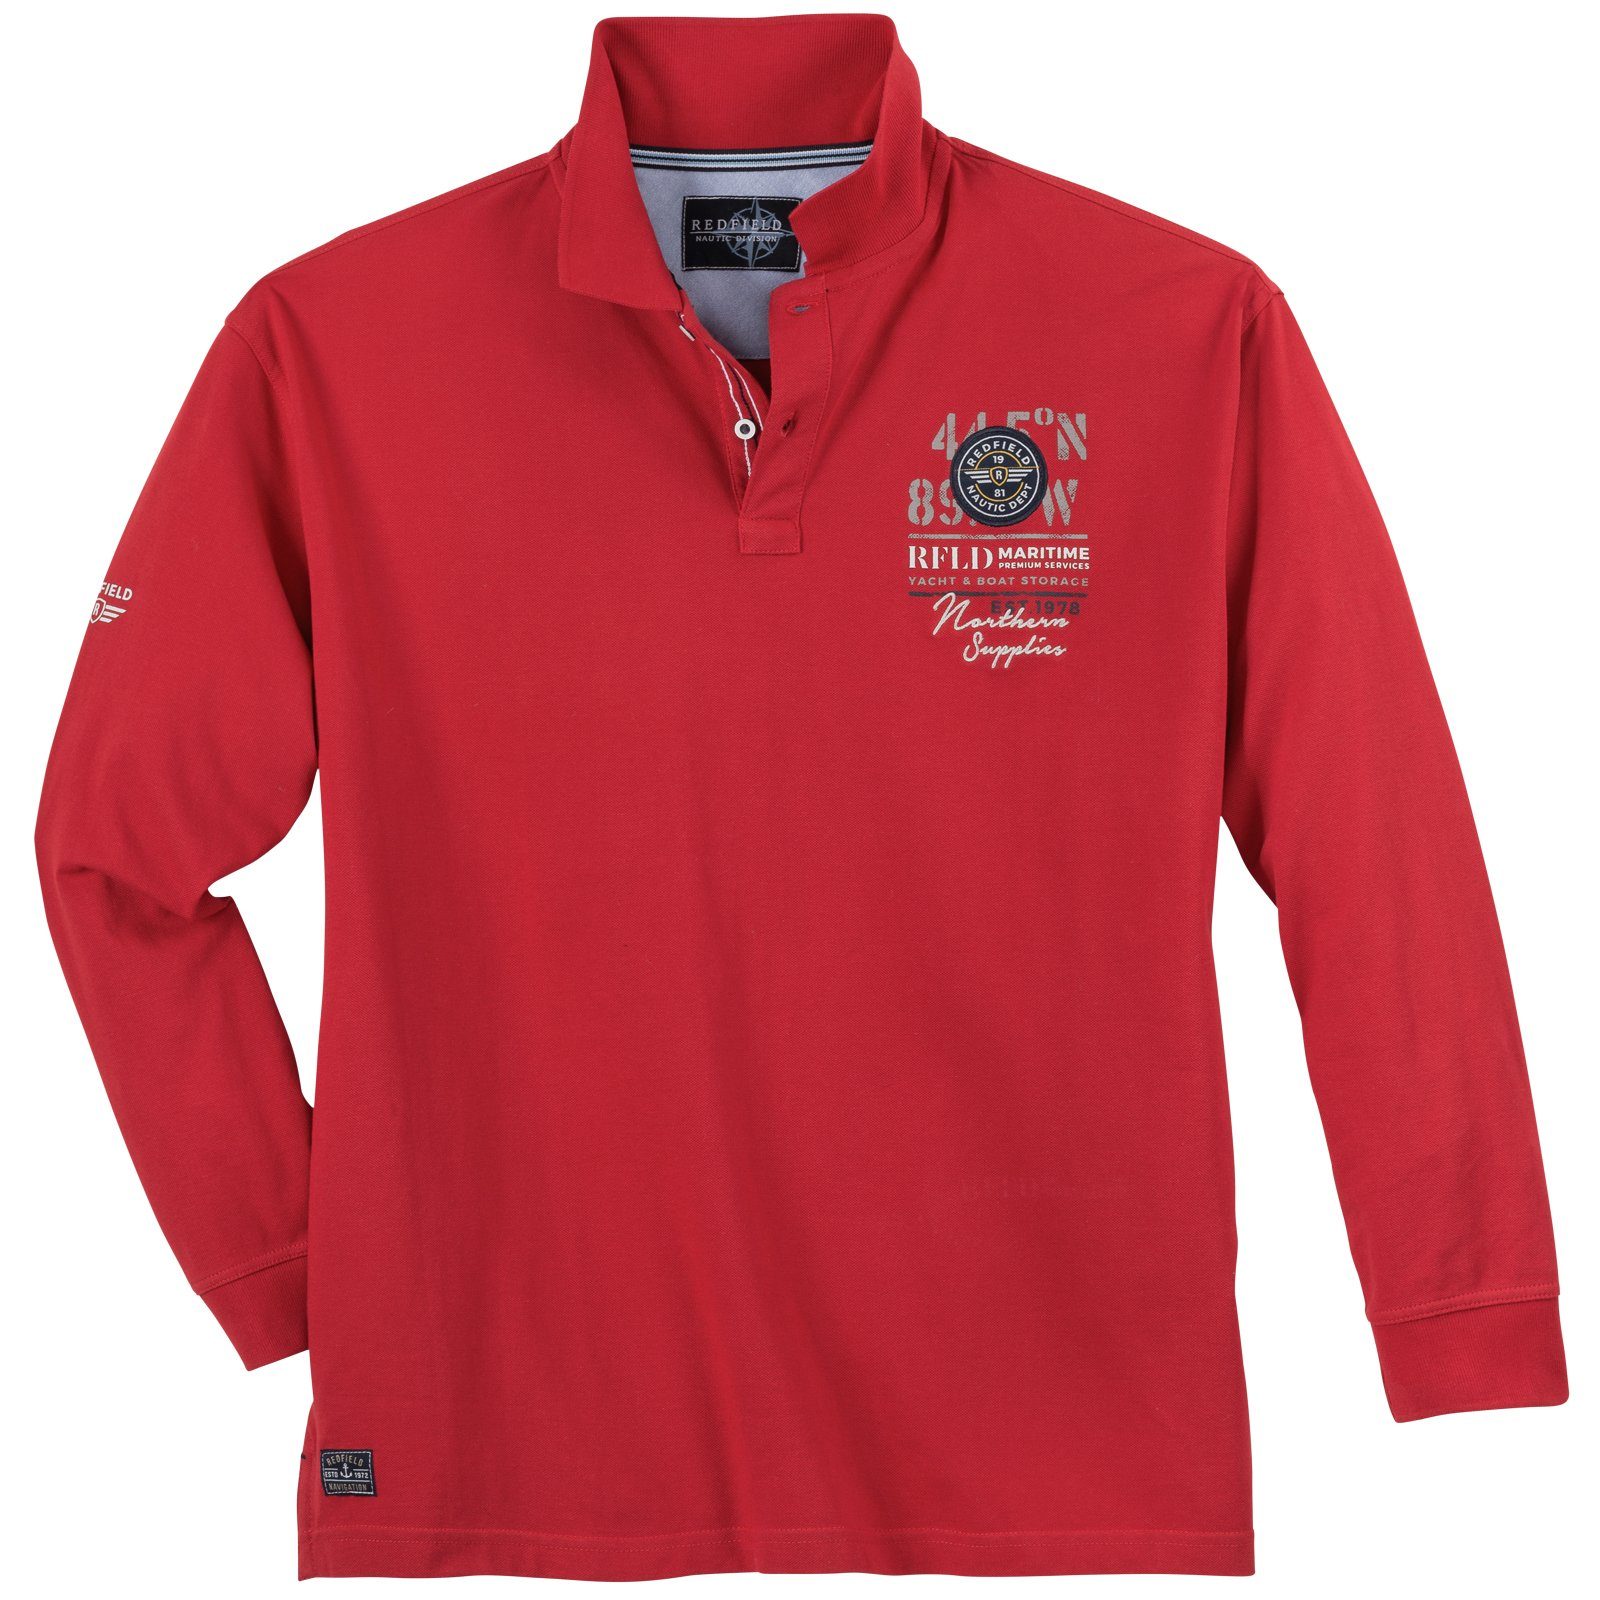 redfield Langarm-Poloshirt Große Redfield Herren Langarm-Poloshirt Größen rot maritim